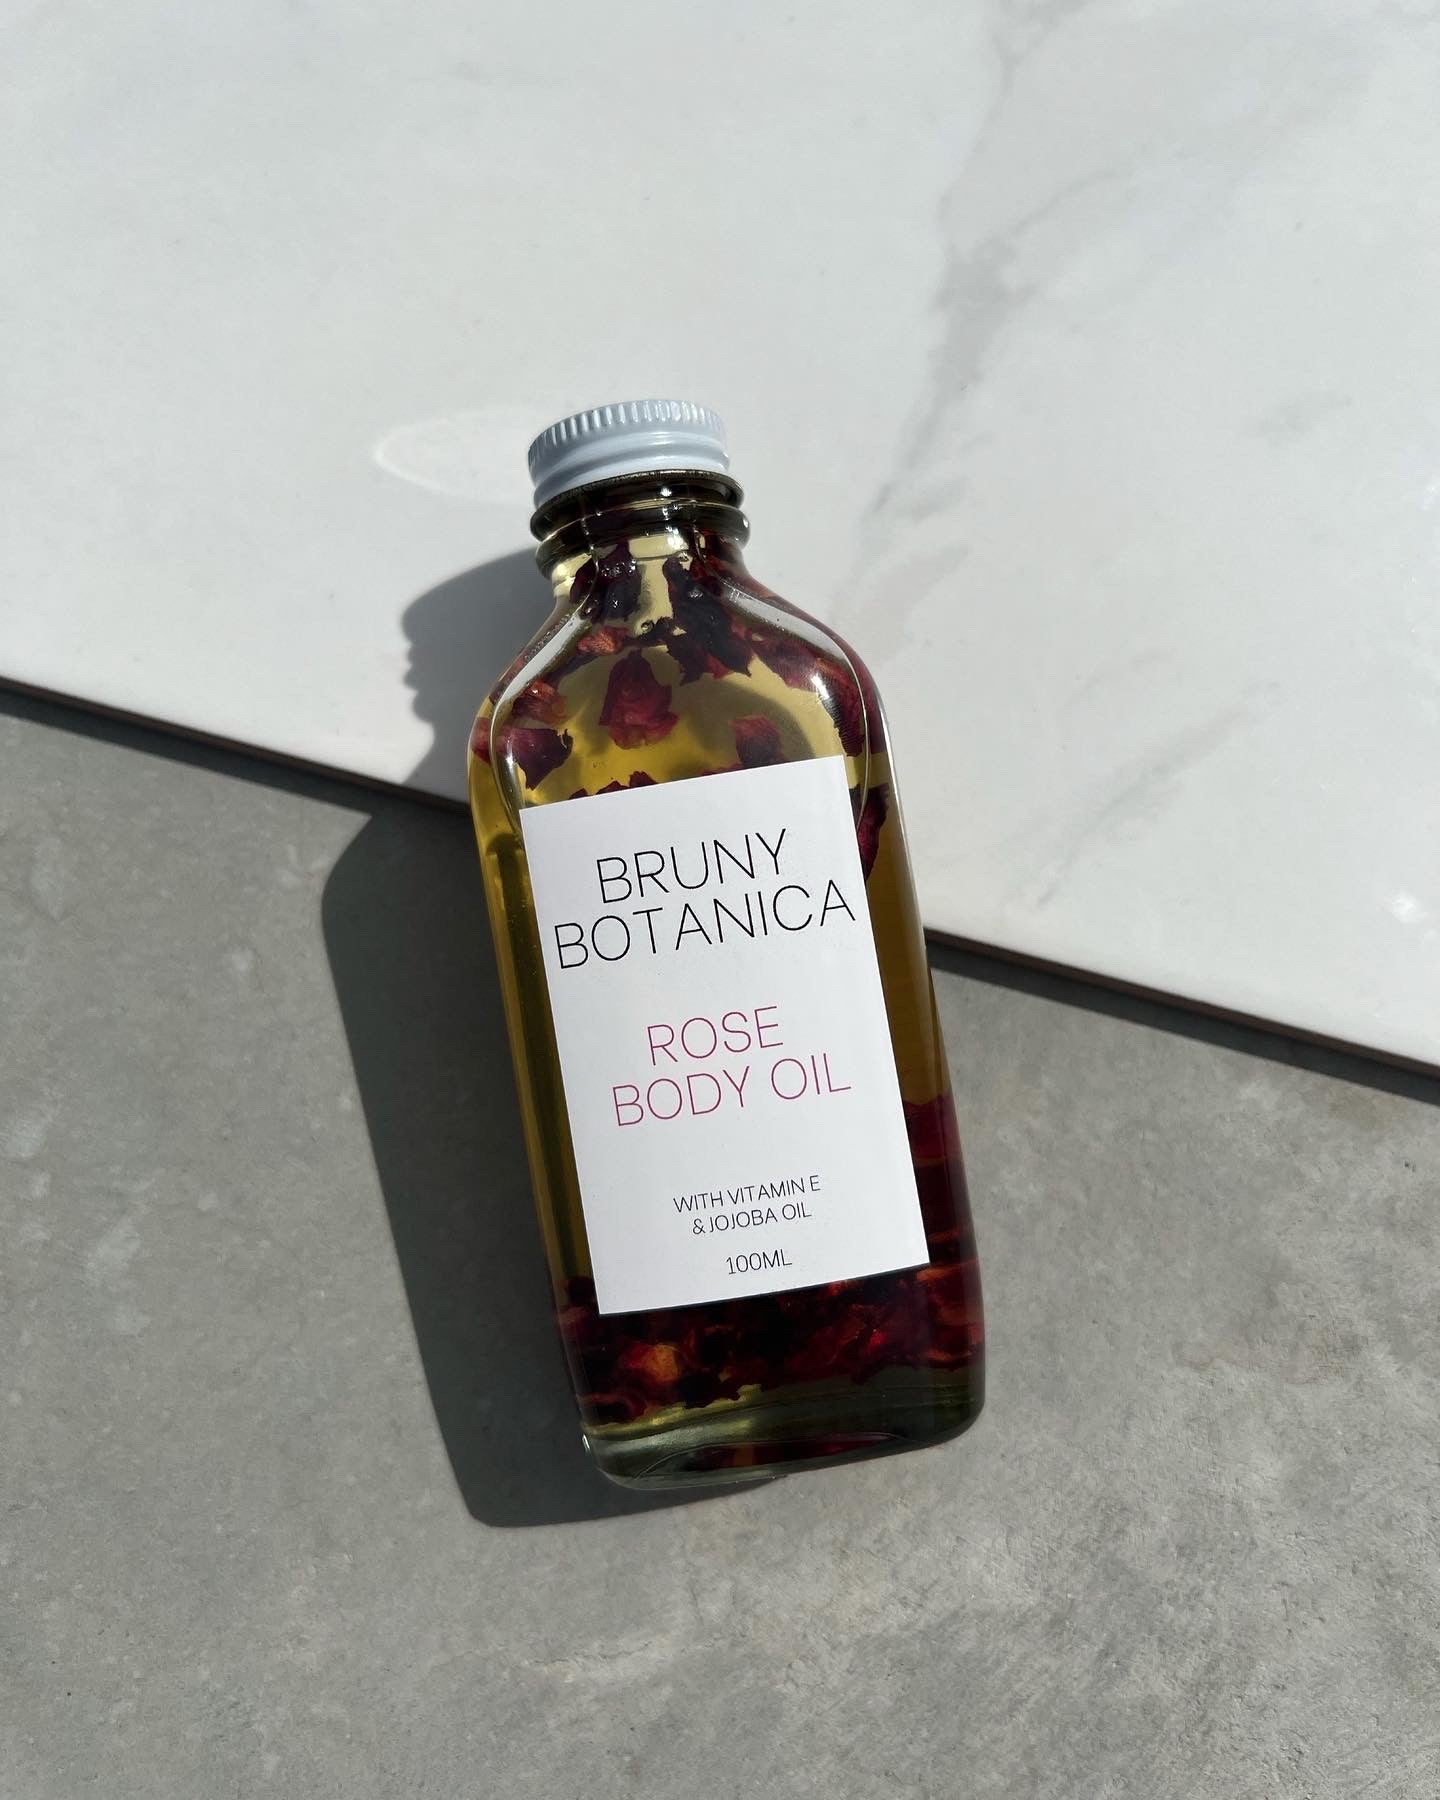 Rose Body Oil by Bruny Botanica Bath & Body Bruny Botanica 